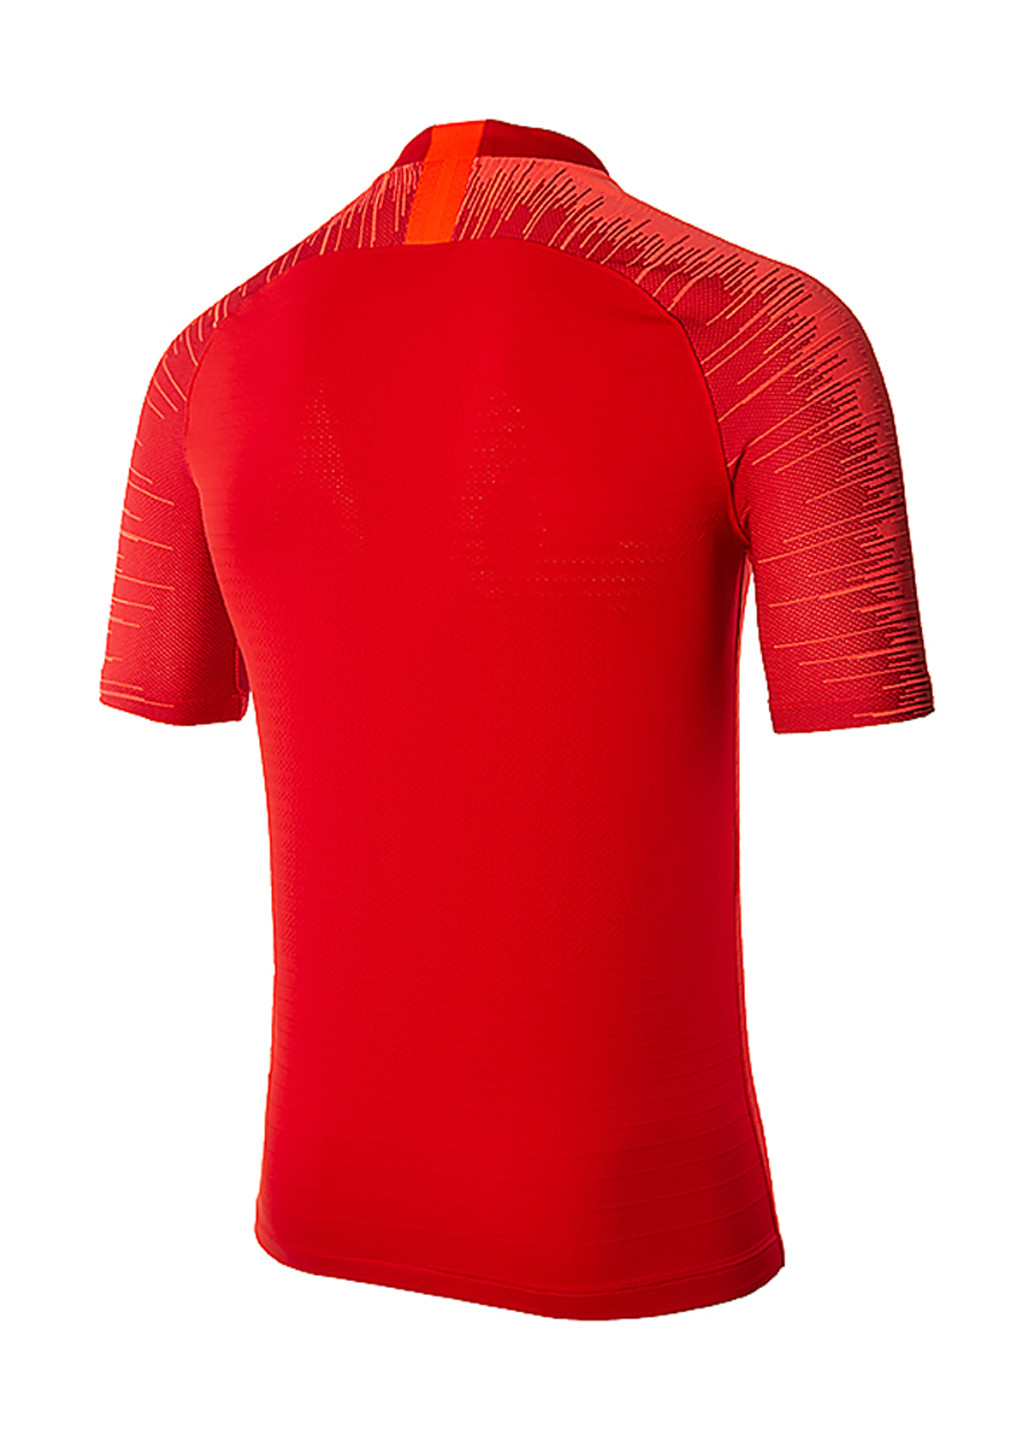 Красная футболка Nike VAPOR KNIT II JERSEY Short Sleeve